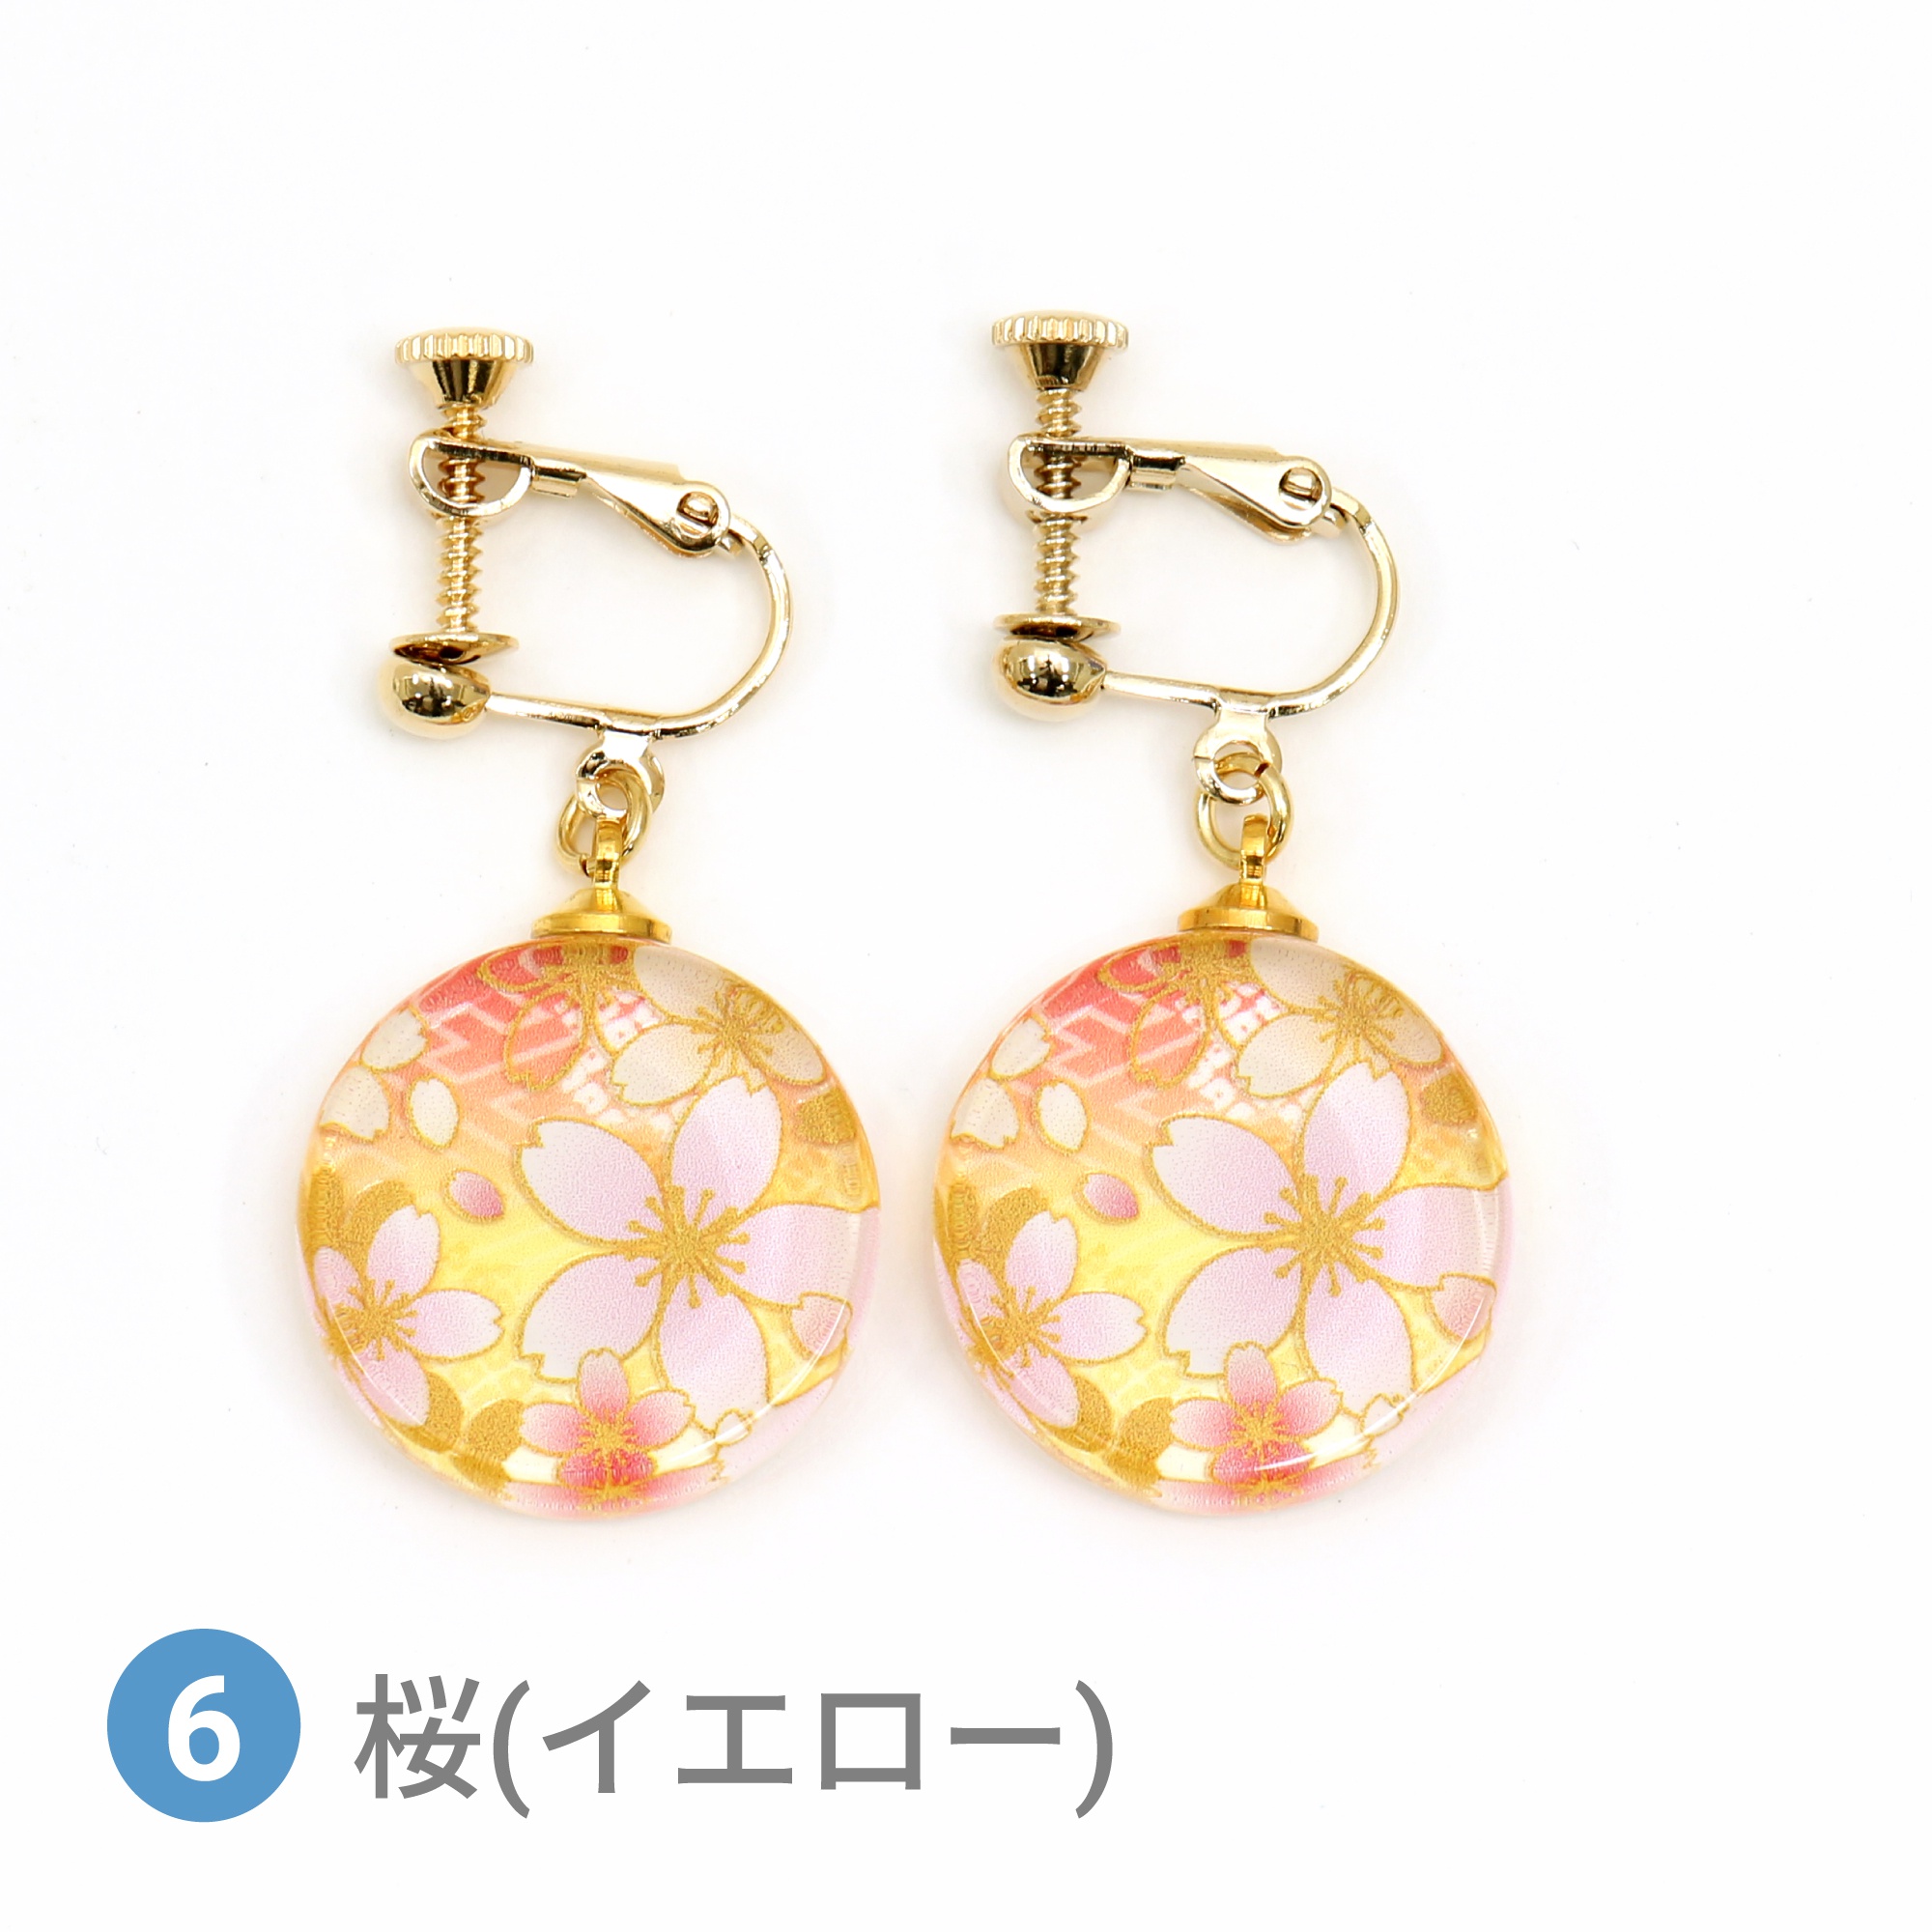 Glass accessories Earring WABANA Cherry blossom yellow round shape